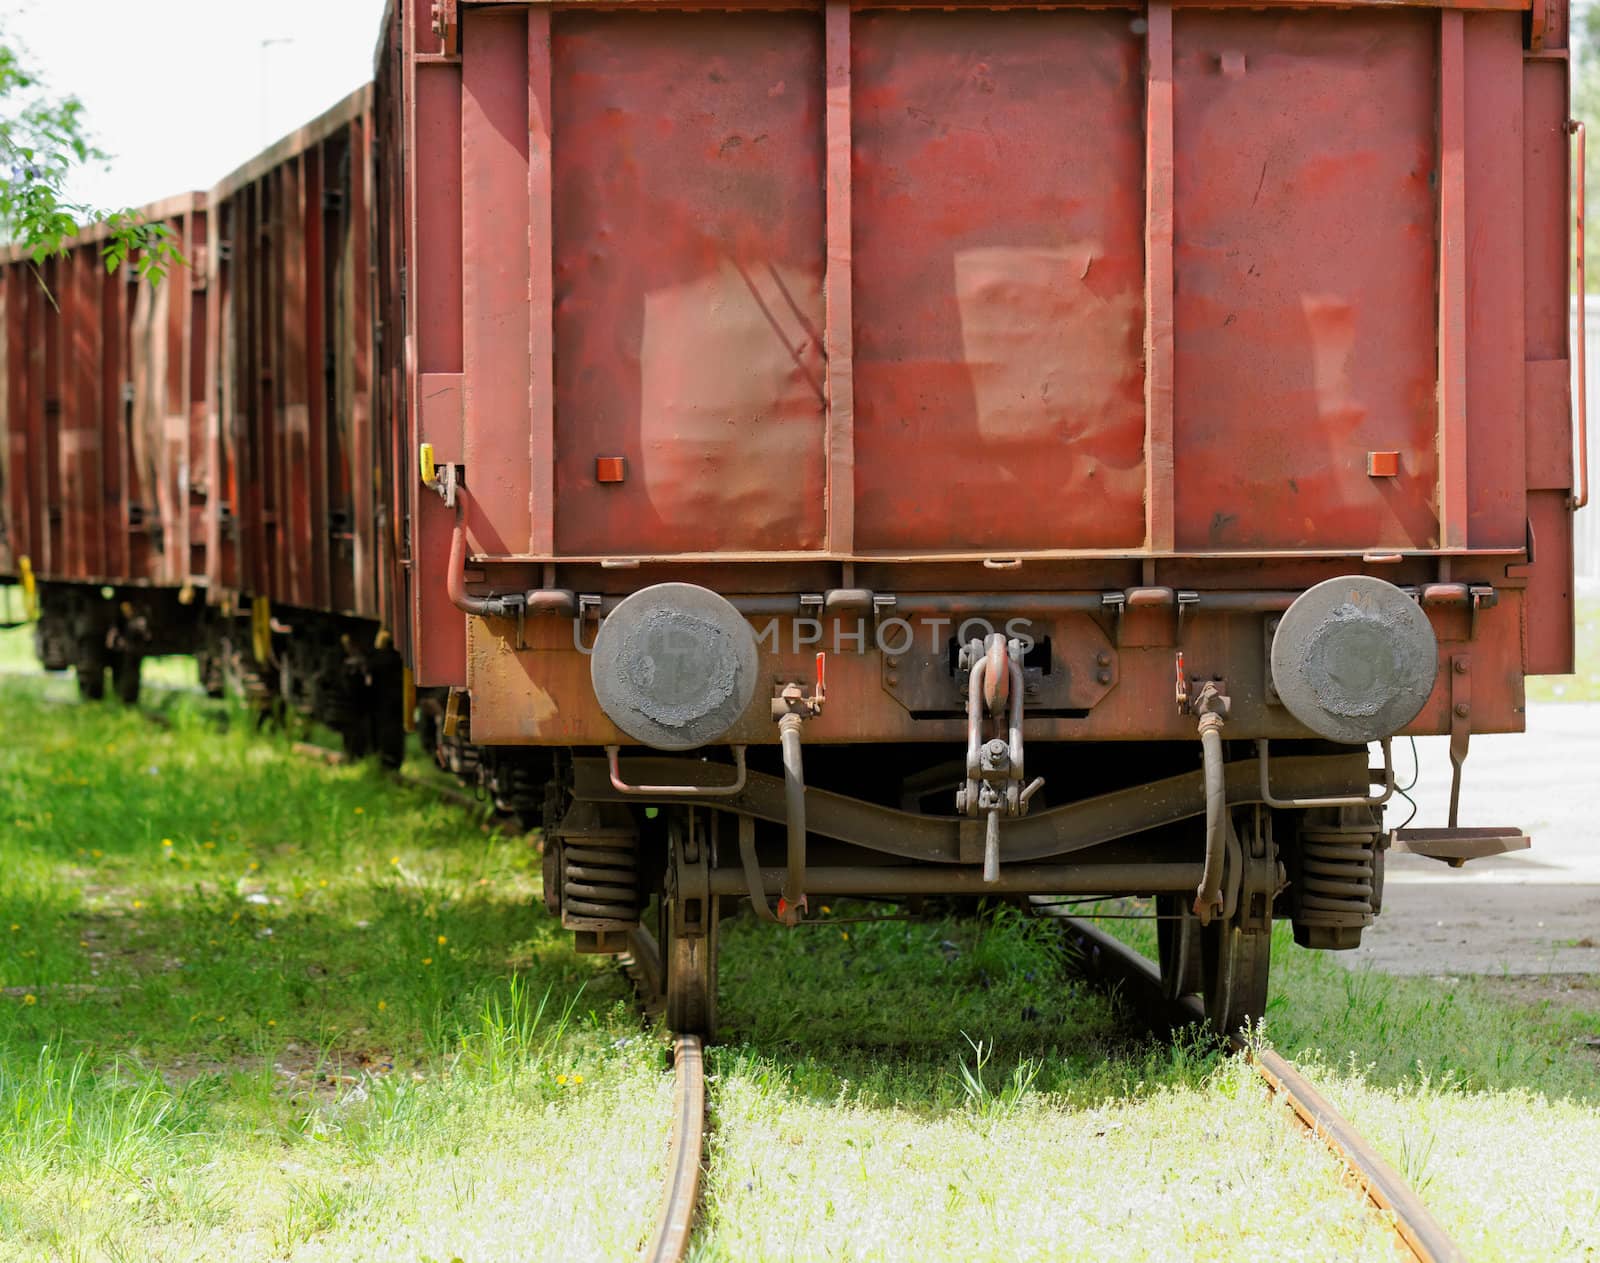 Old wagon, in an unused grassy railway track